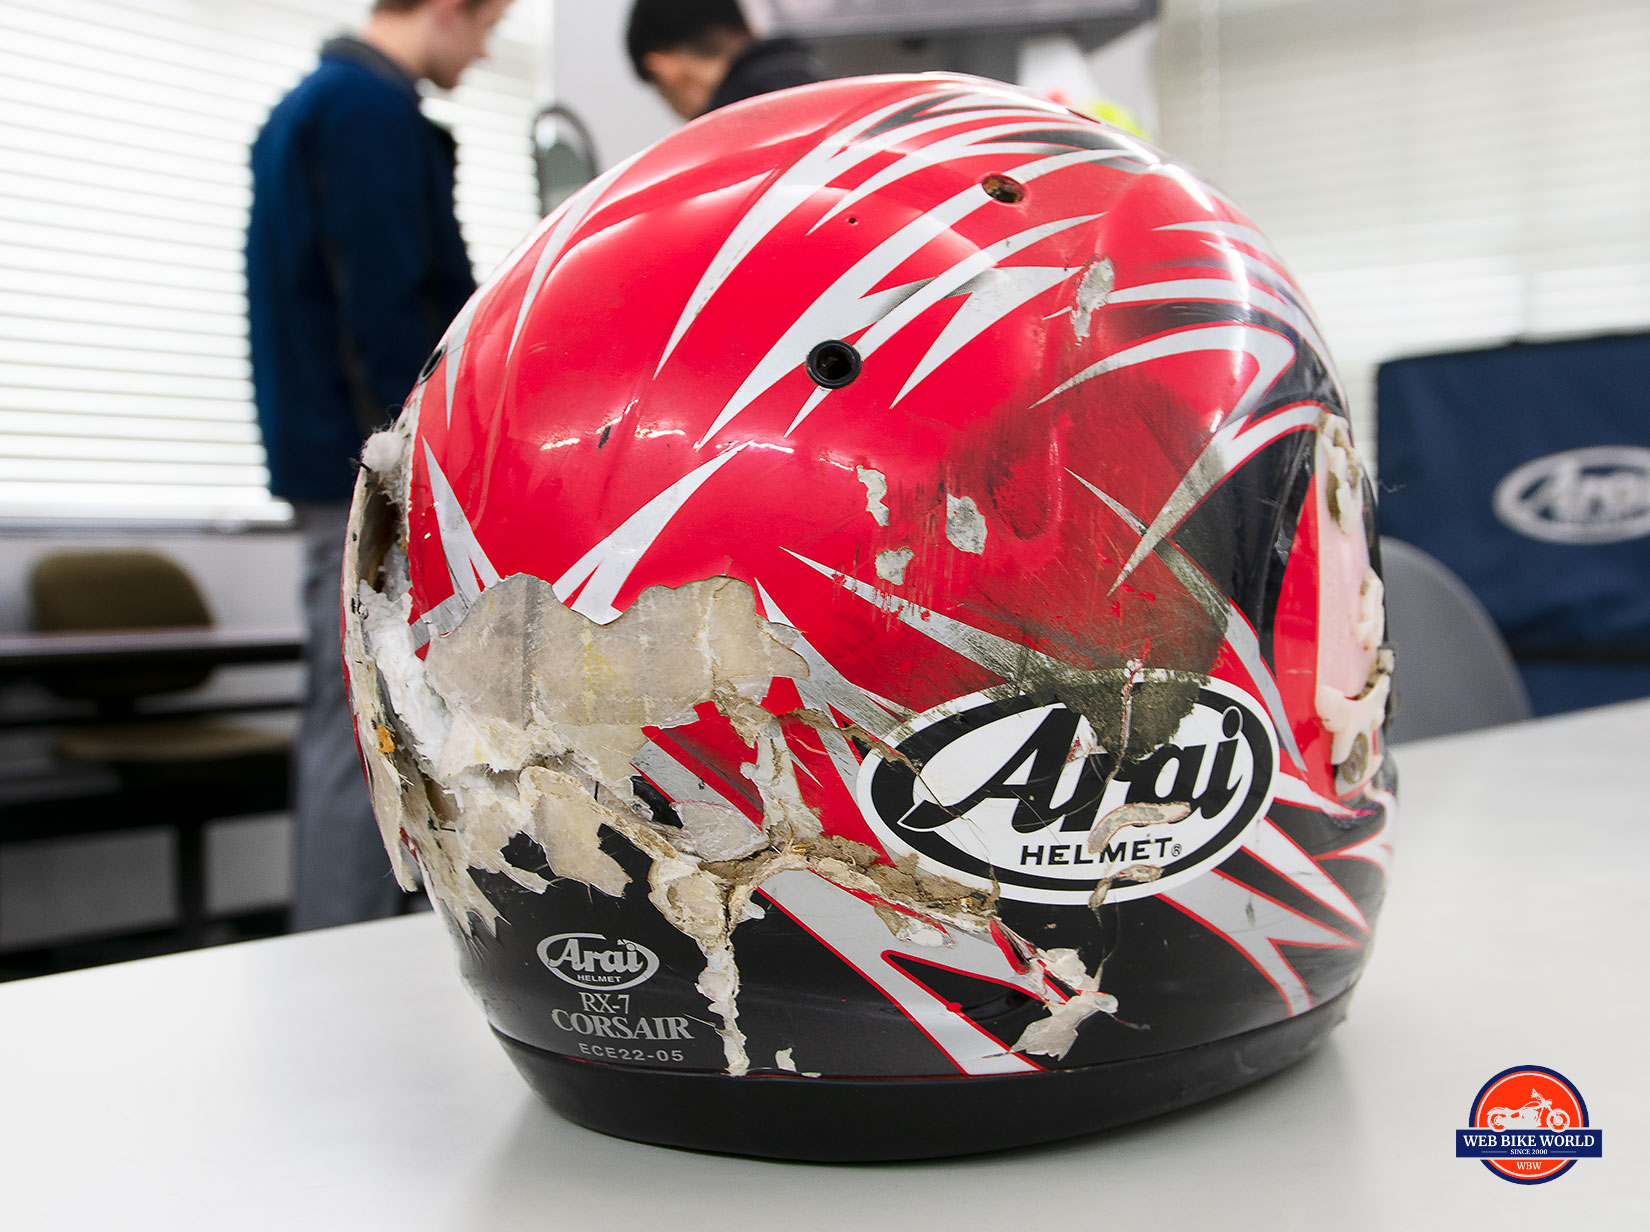 An Arai helmet showing damage